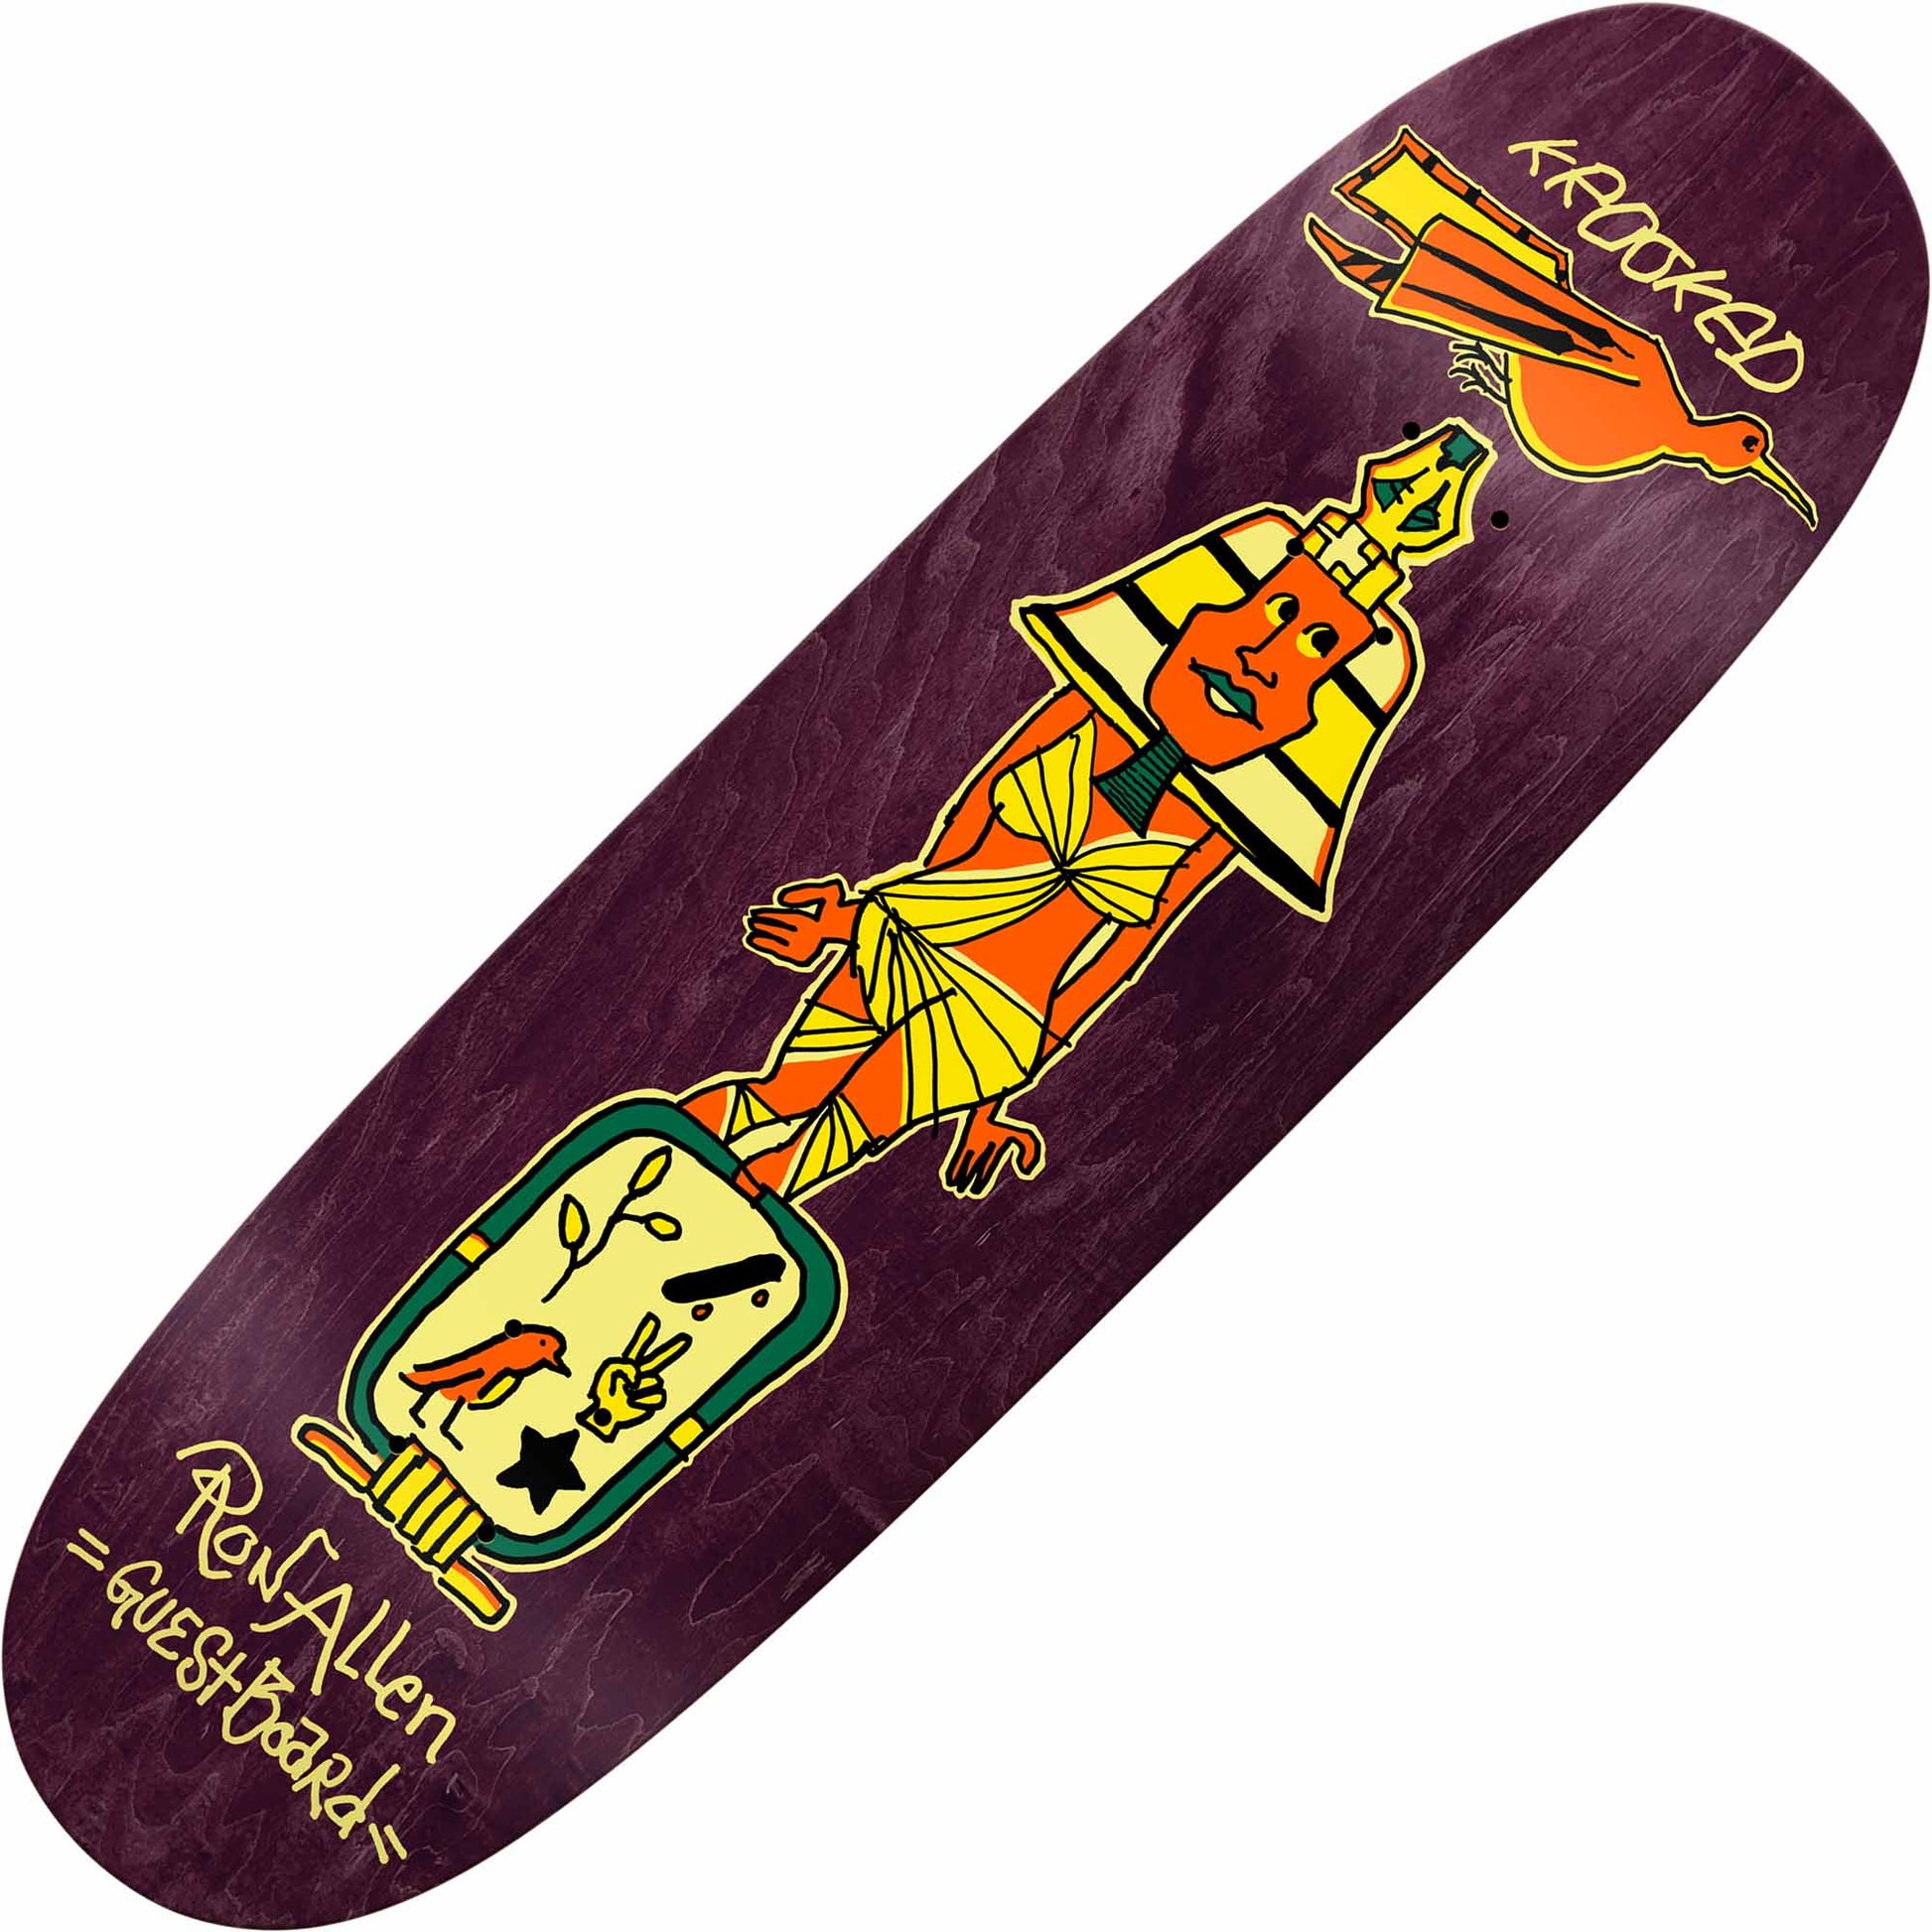 Krooked Ron Allen Guest Pro Deck (8.75") - Tiki Room Skateboards - 1